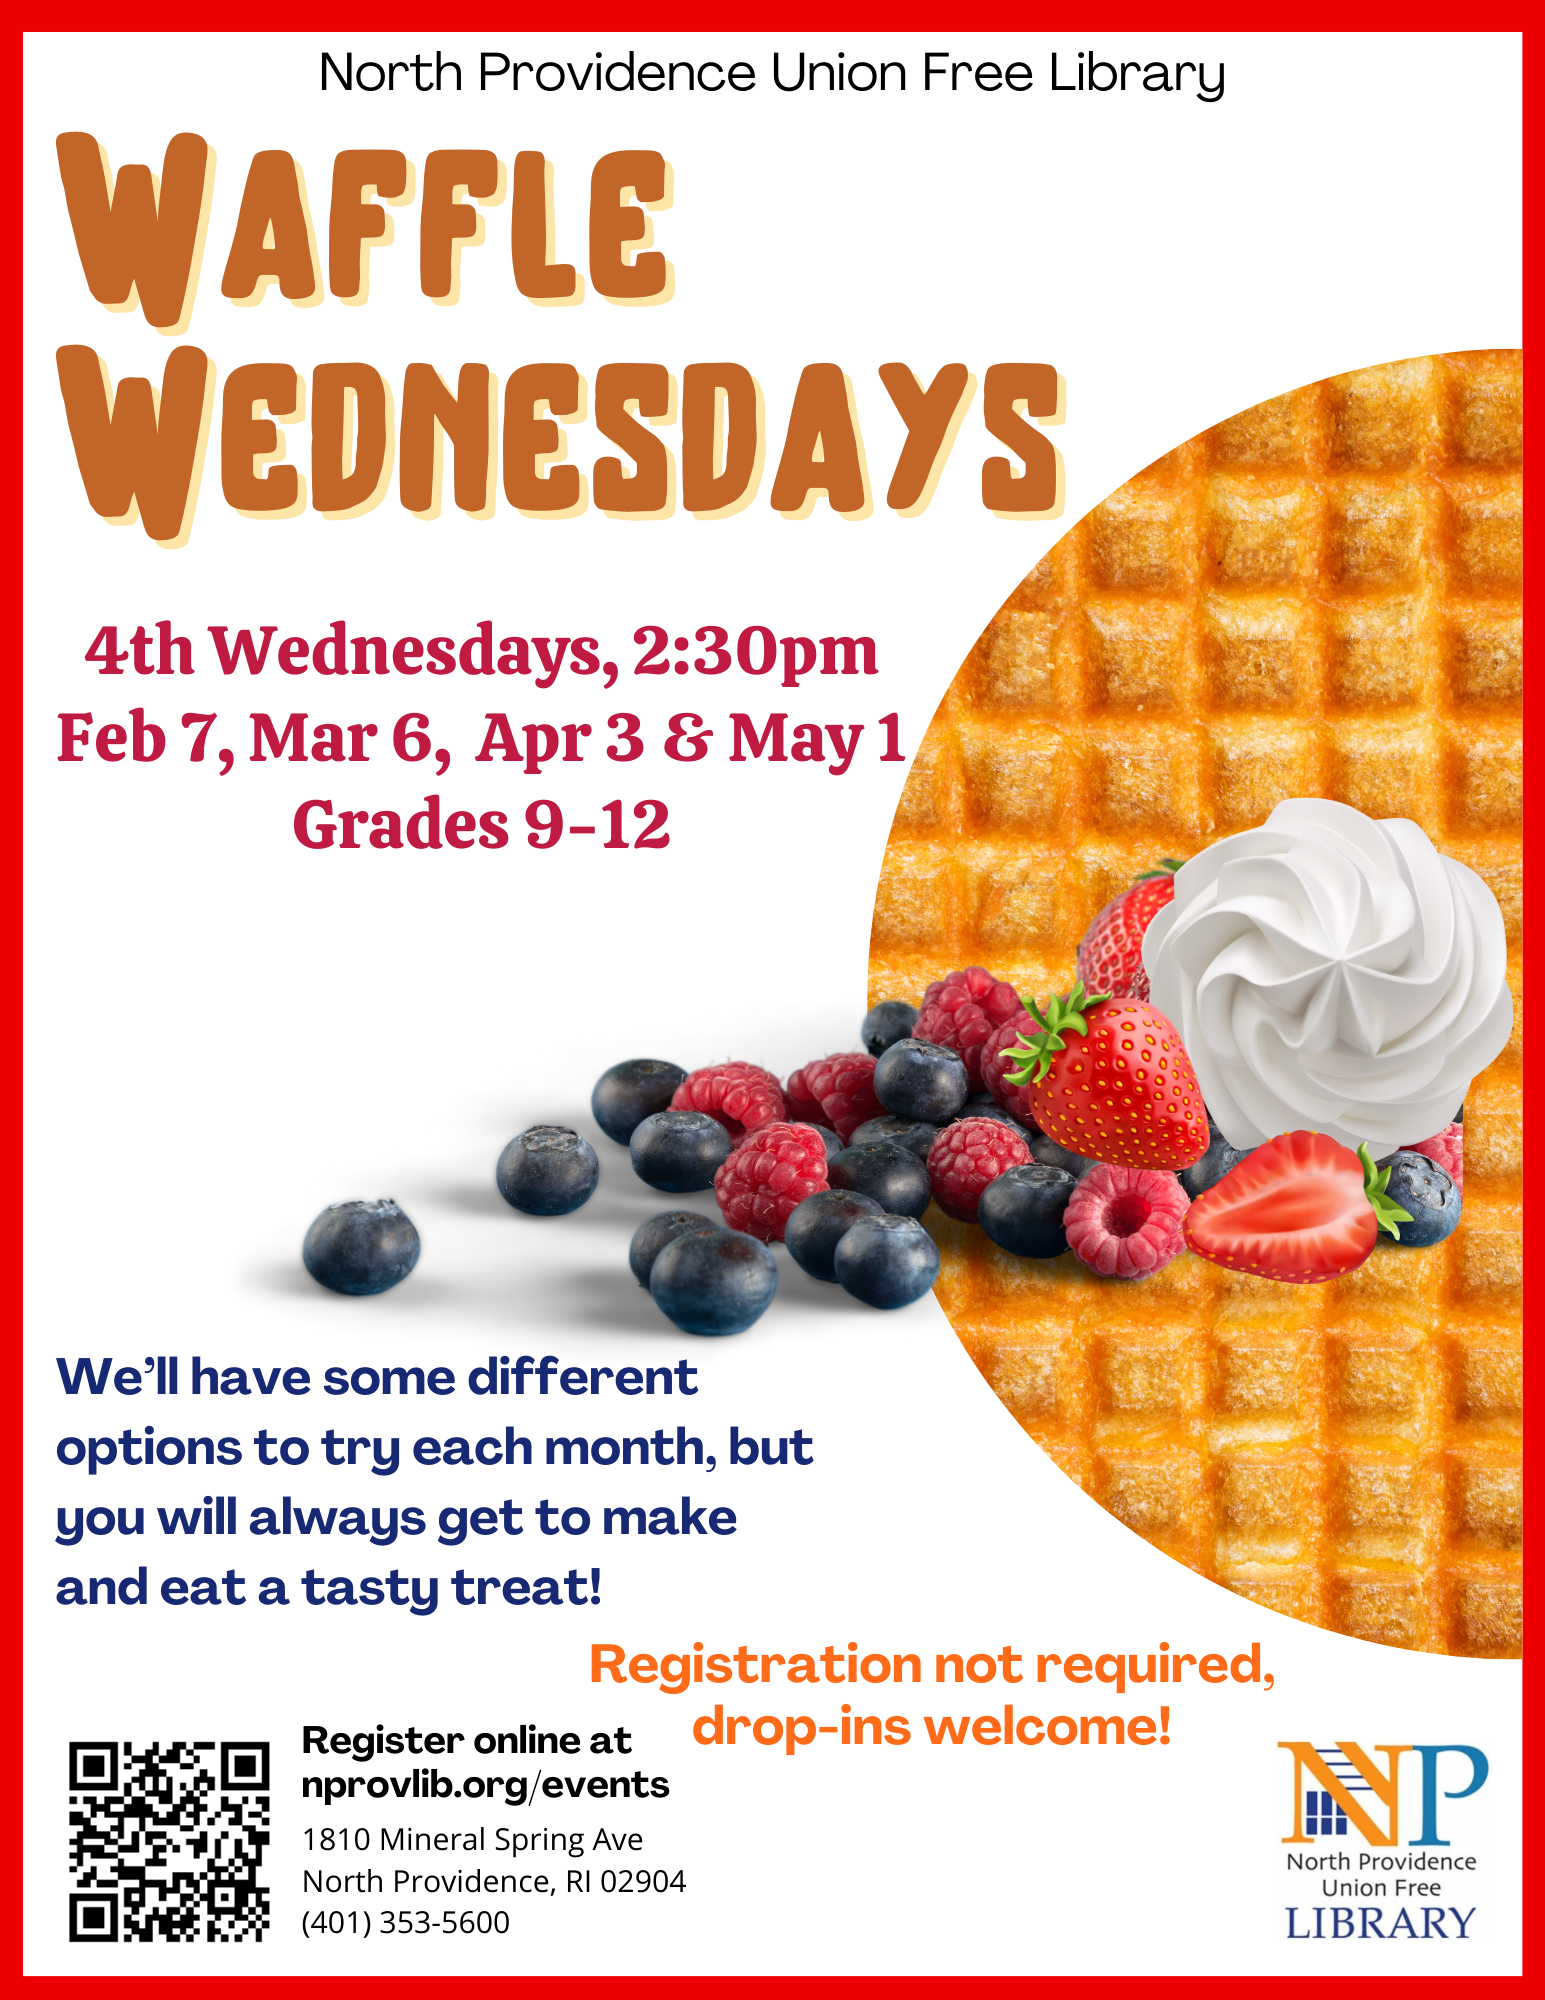 Flyer describing the Waffle Wednesday program.